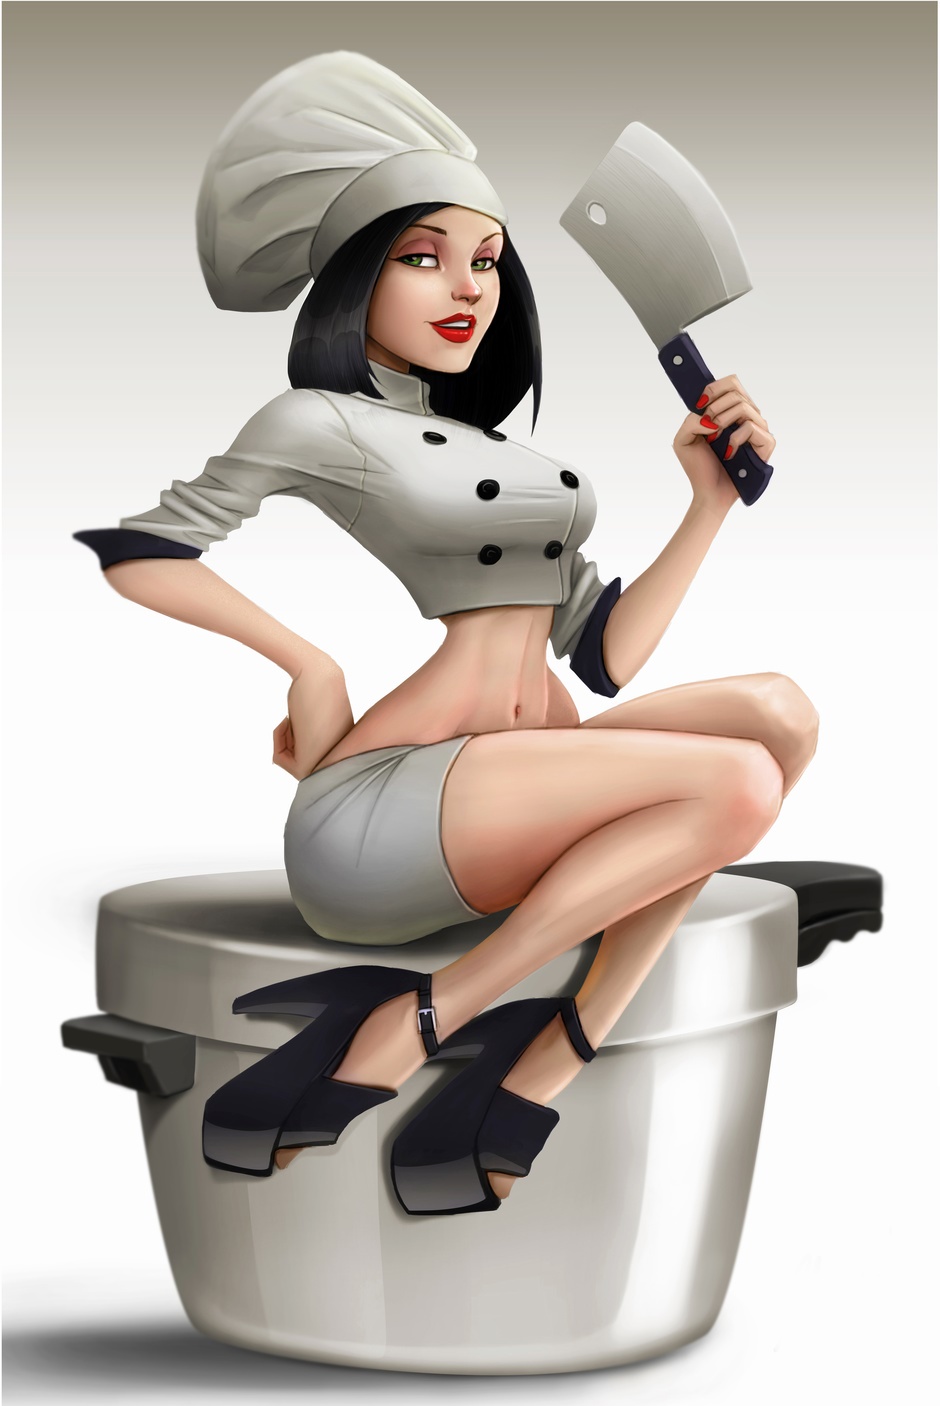 Фото Девушка-повар с ножом-топором сидит на кастрюле, by Mauricio Morali Romo